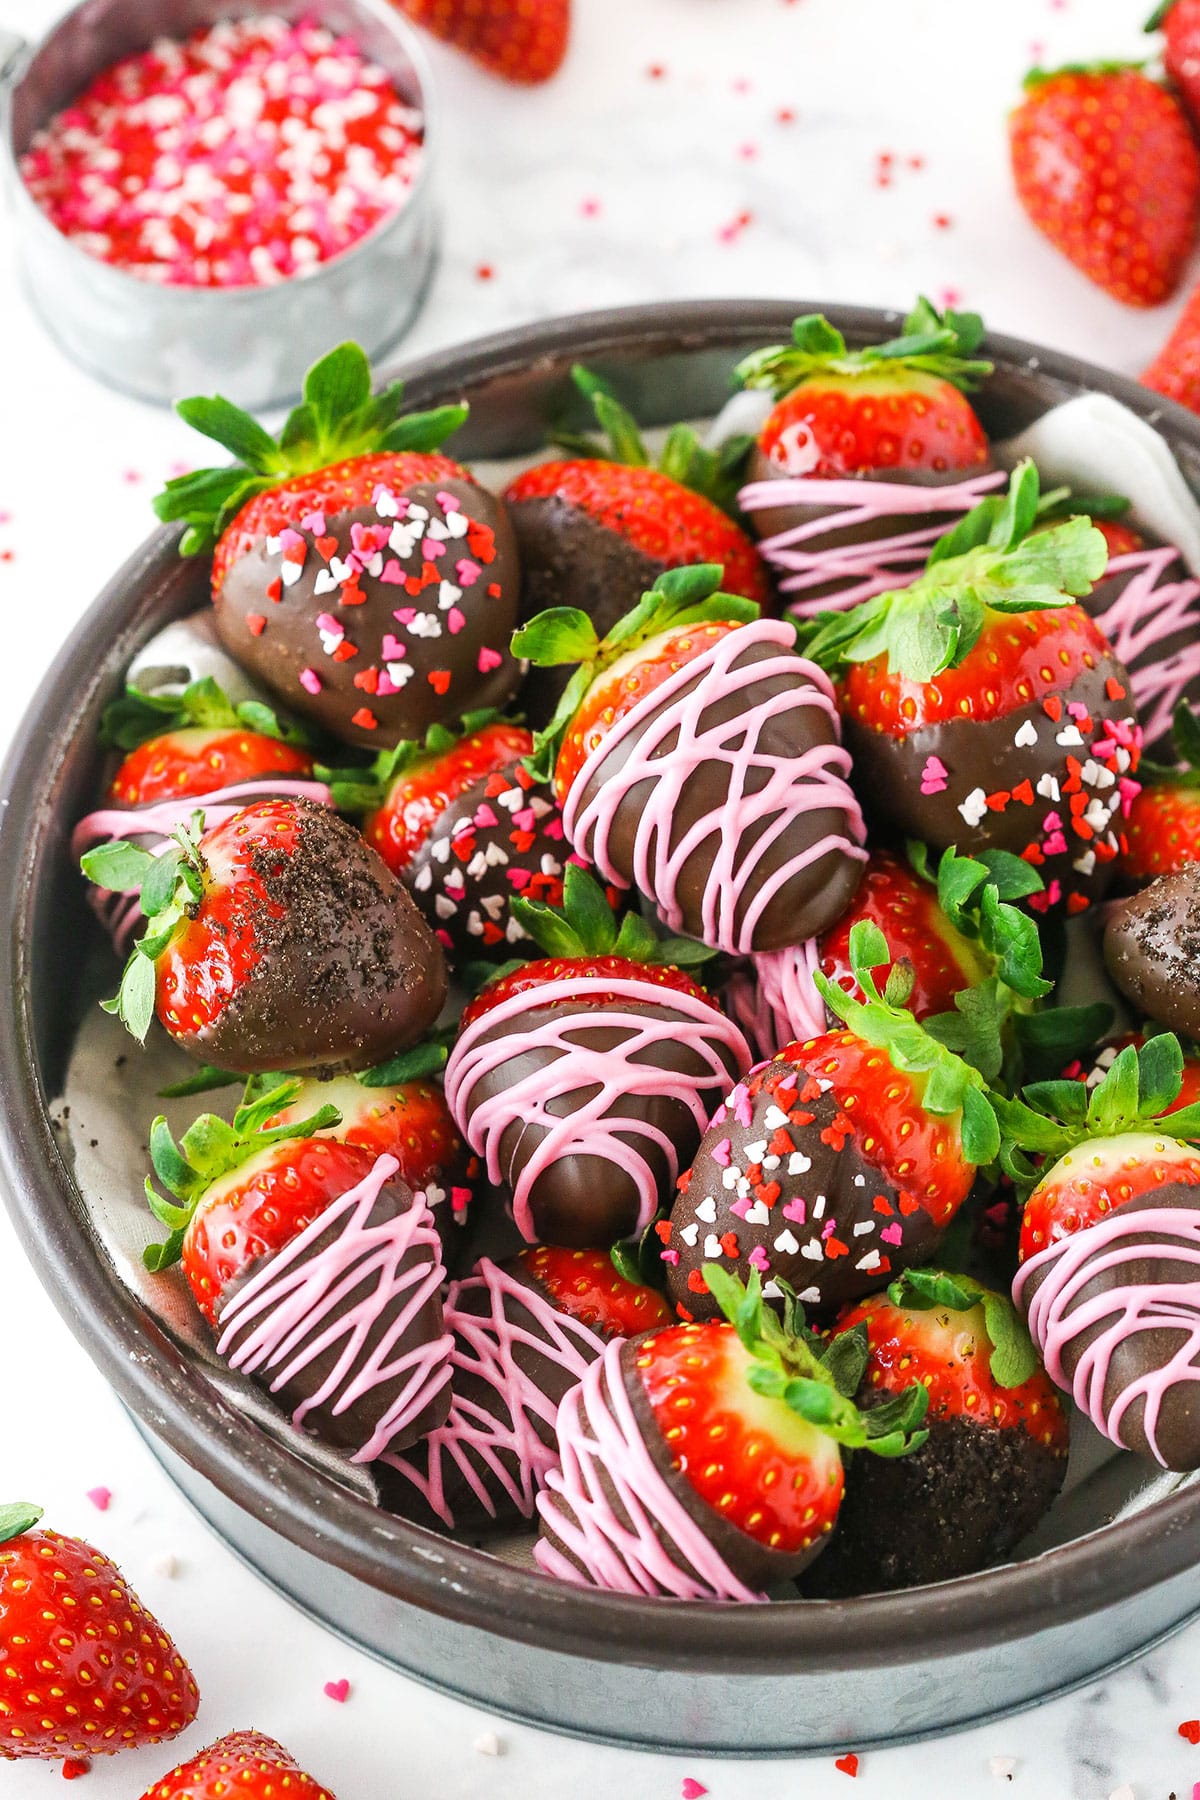 https://www.lifeloveandsugar.com/wp-content/uploads/2023/03/Chocolate-Covered-Strawberries8E.jpg